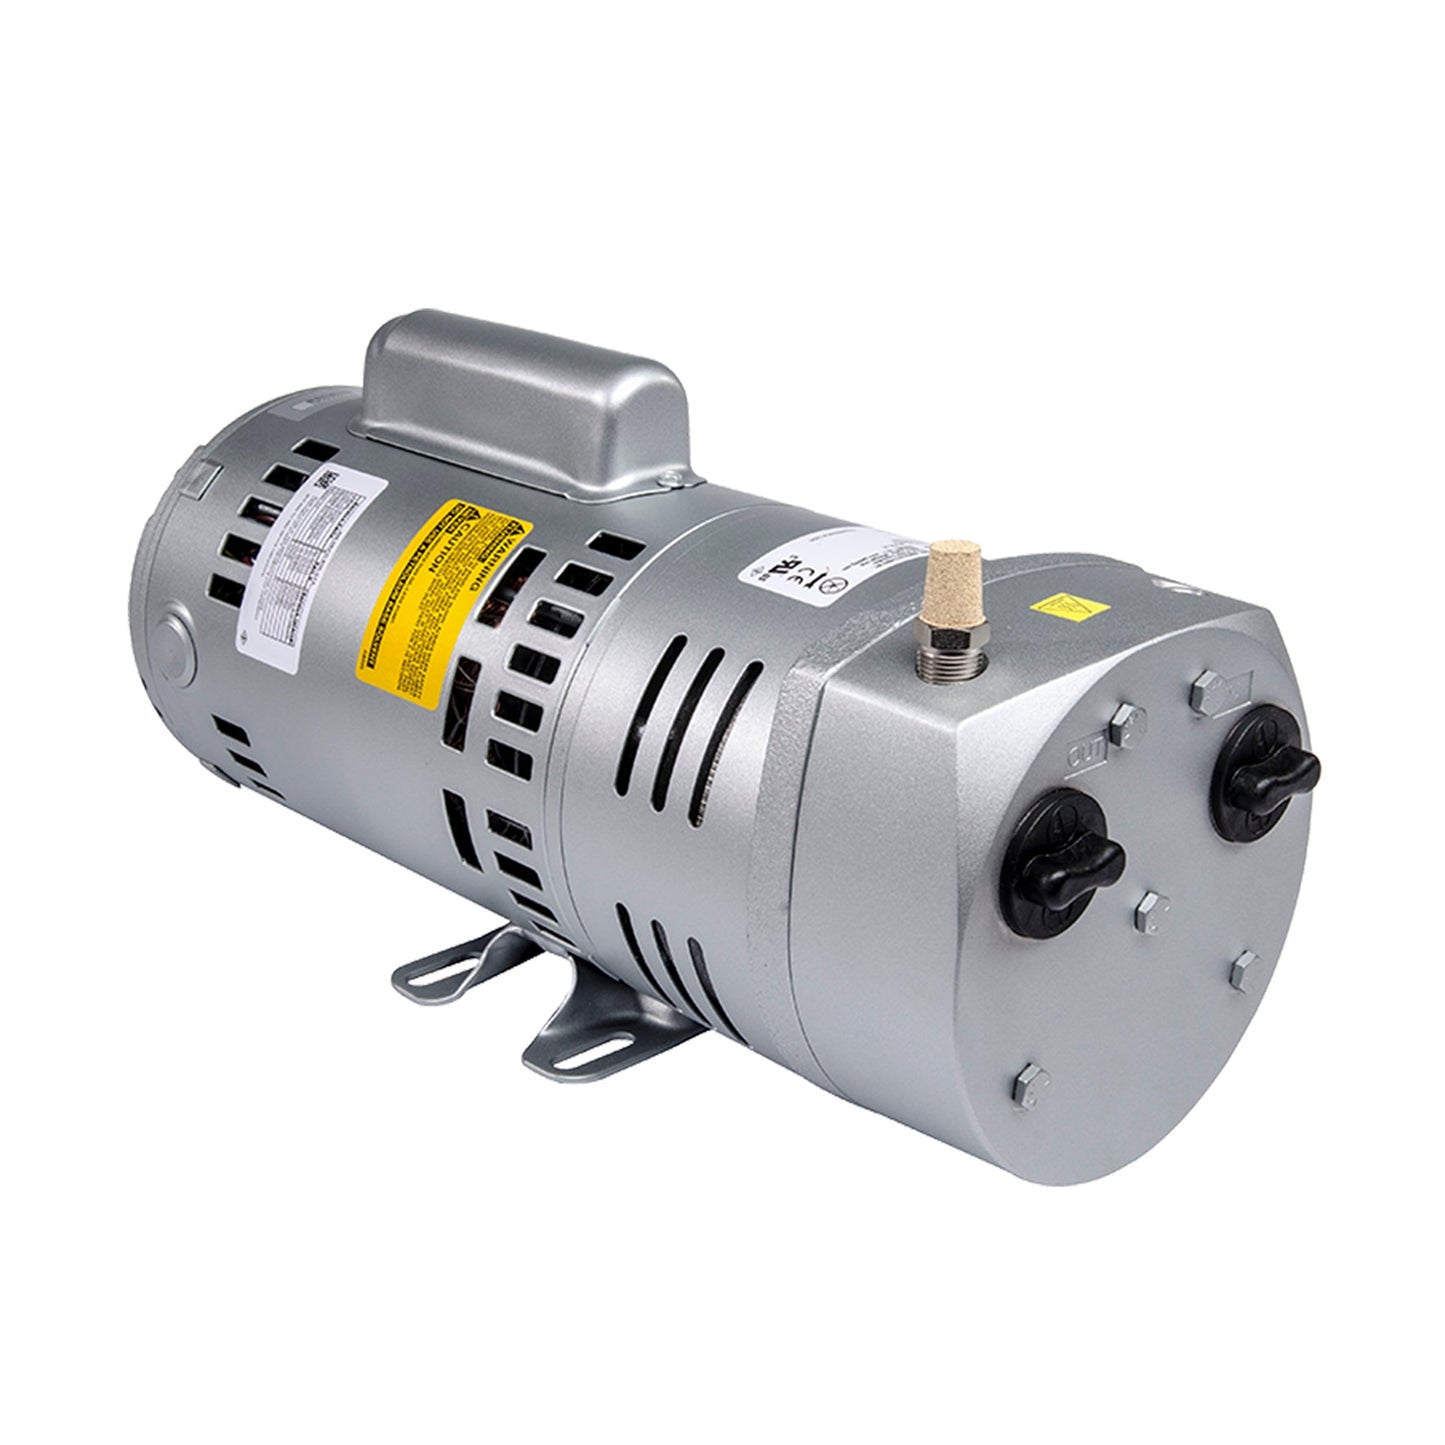 Gast 1023-101Q-G279 Rotary Vane Air Compressor / Vacuum Pump 3/4 HP 8.5 CFM-50HZ 10 CFM-60HZ 26.5 IN-HG